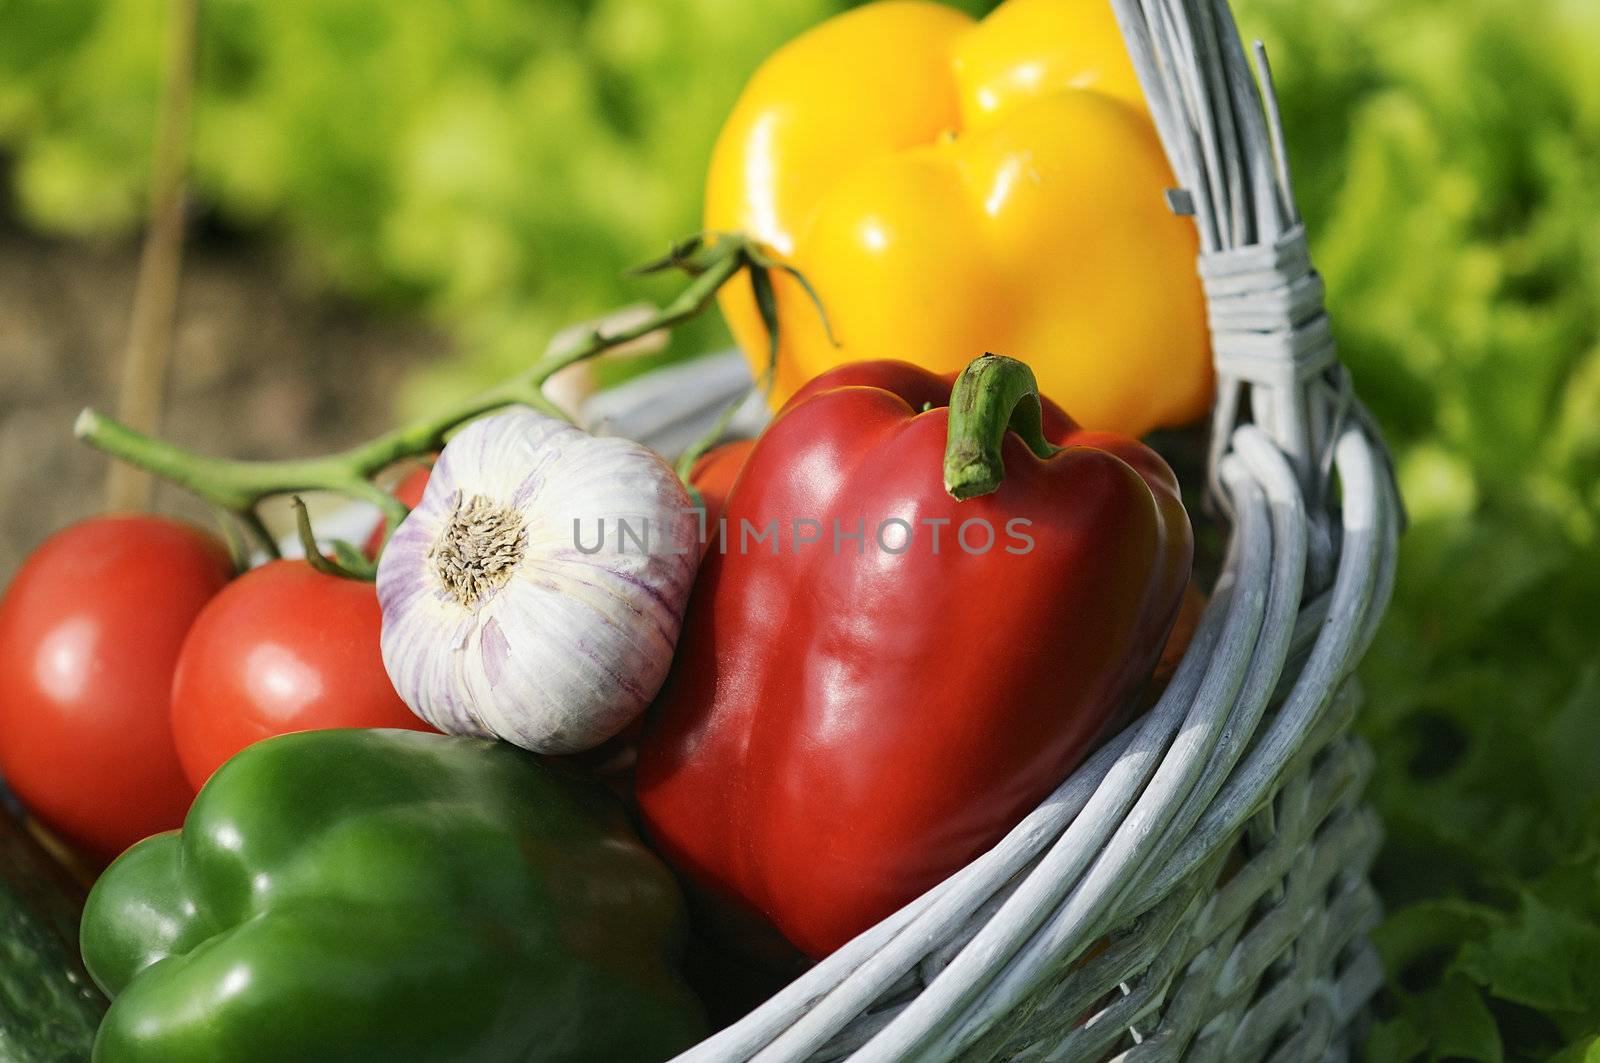 basket of vegetables and in a botanical garden